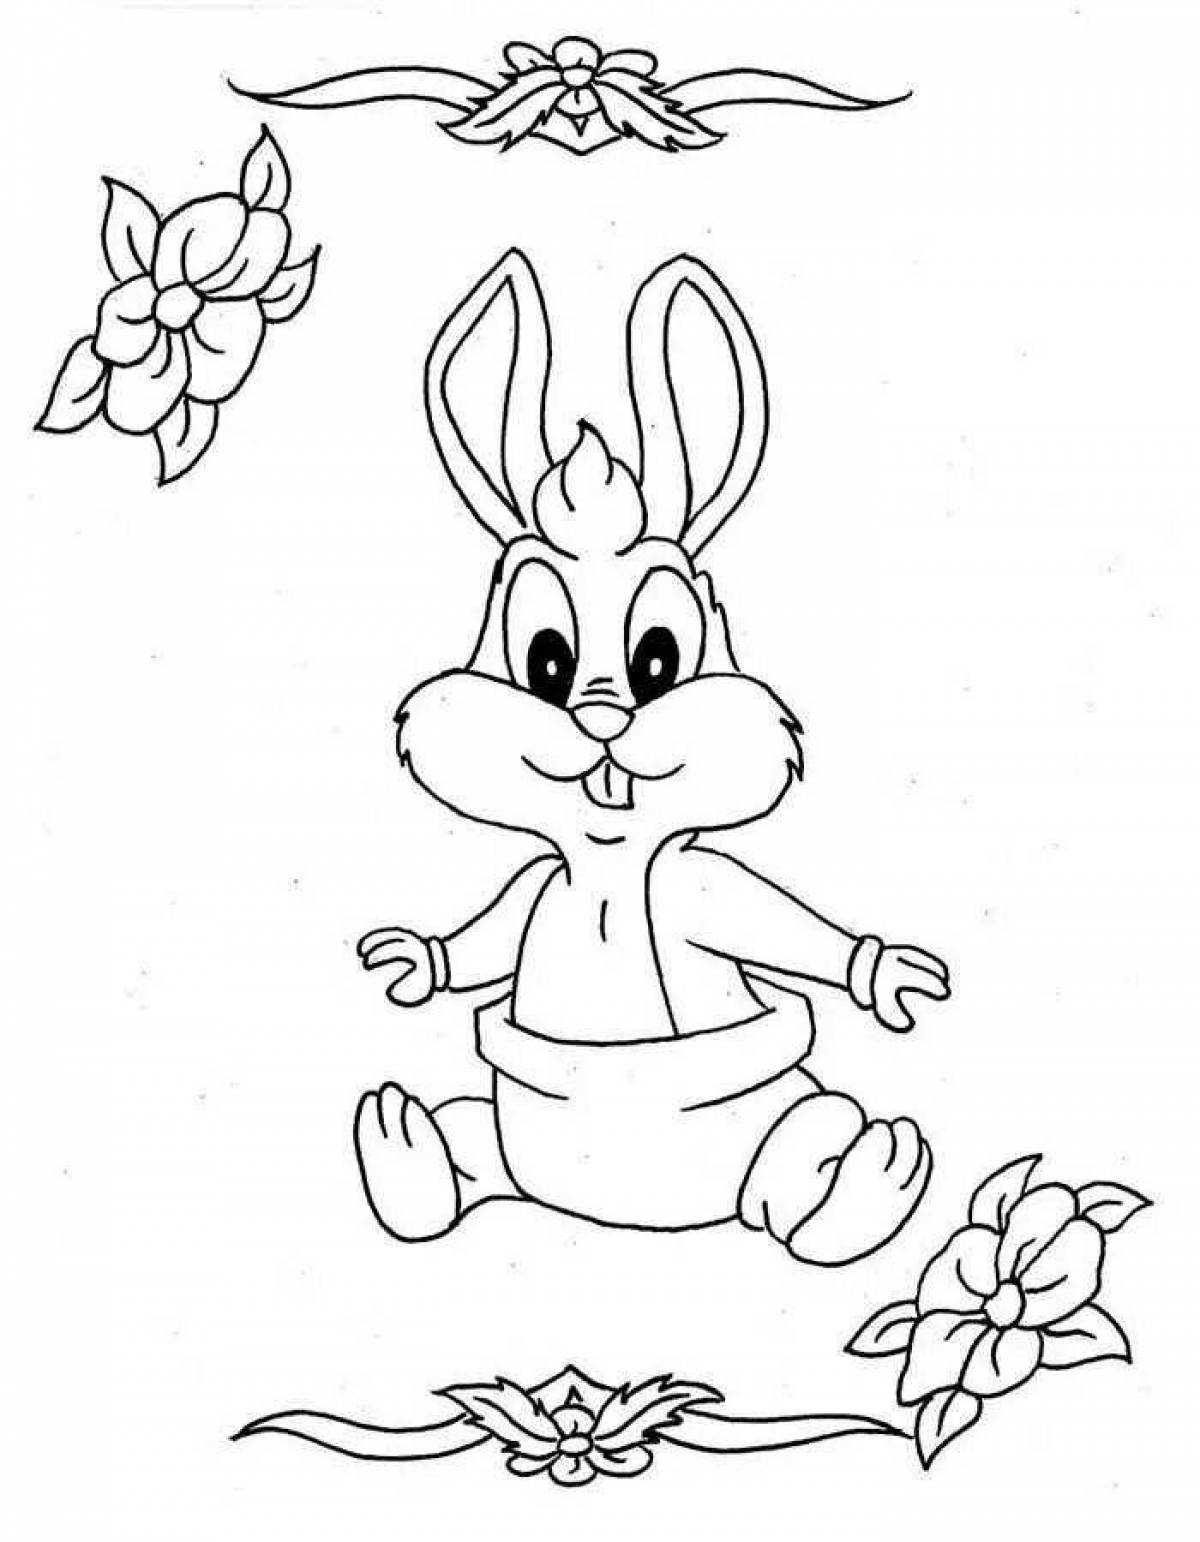 Adorable bunny coloring page